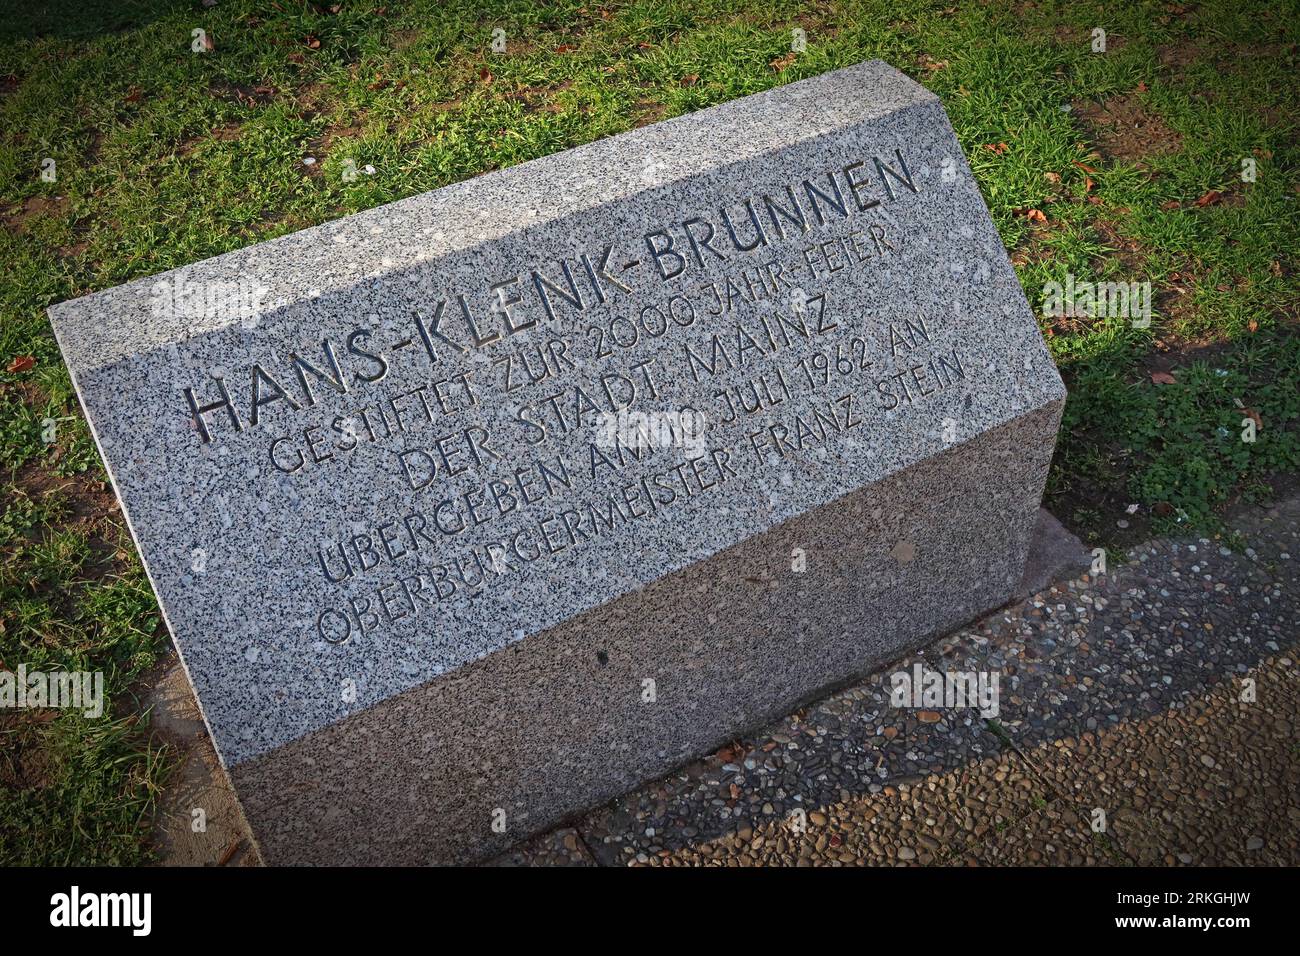 Hans-Klenk-Brunnen Mainz memorial, Mainz city centre, Rhineland-Palatinate, Germany Stock Photo